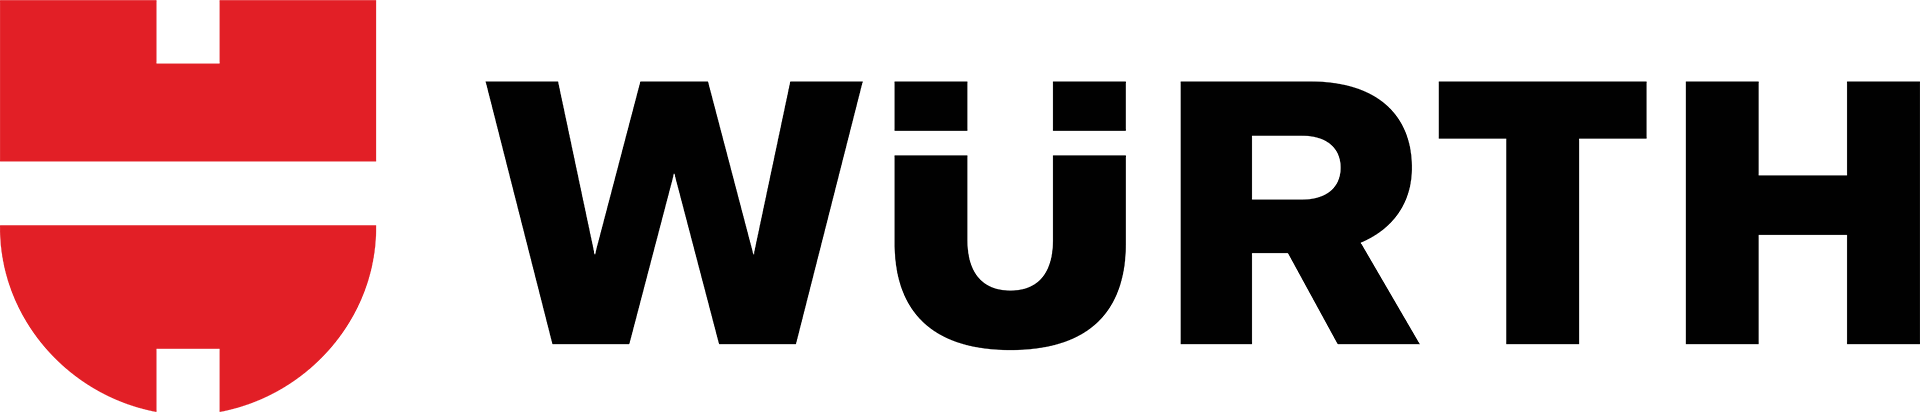 wuerth-logo-1